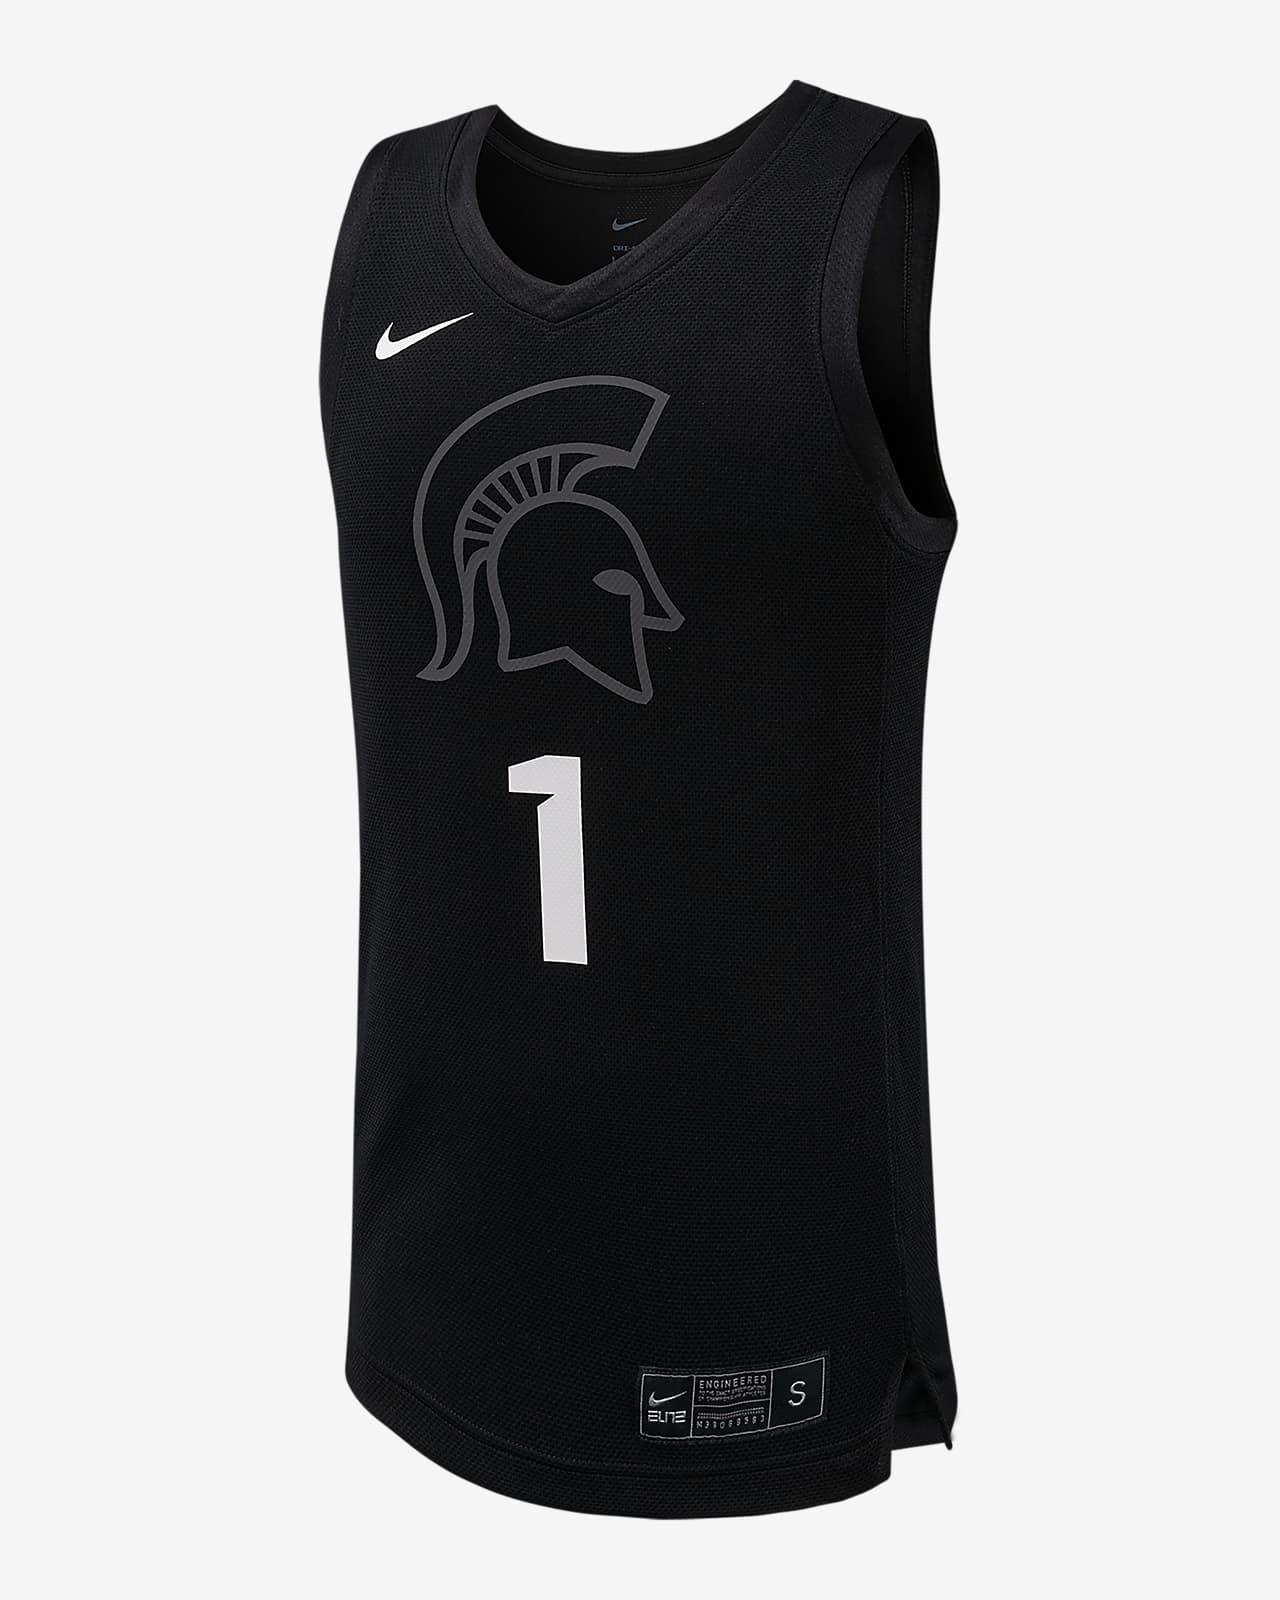 Michigan State Nike College Basketball Replica Jersey